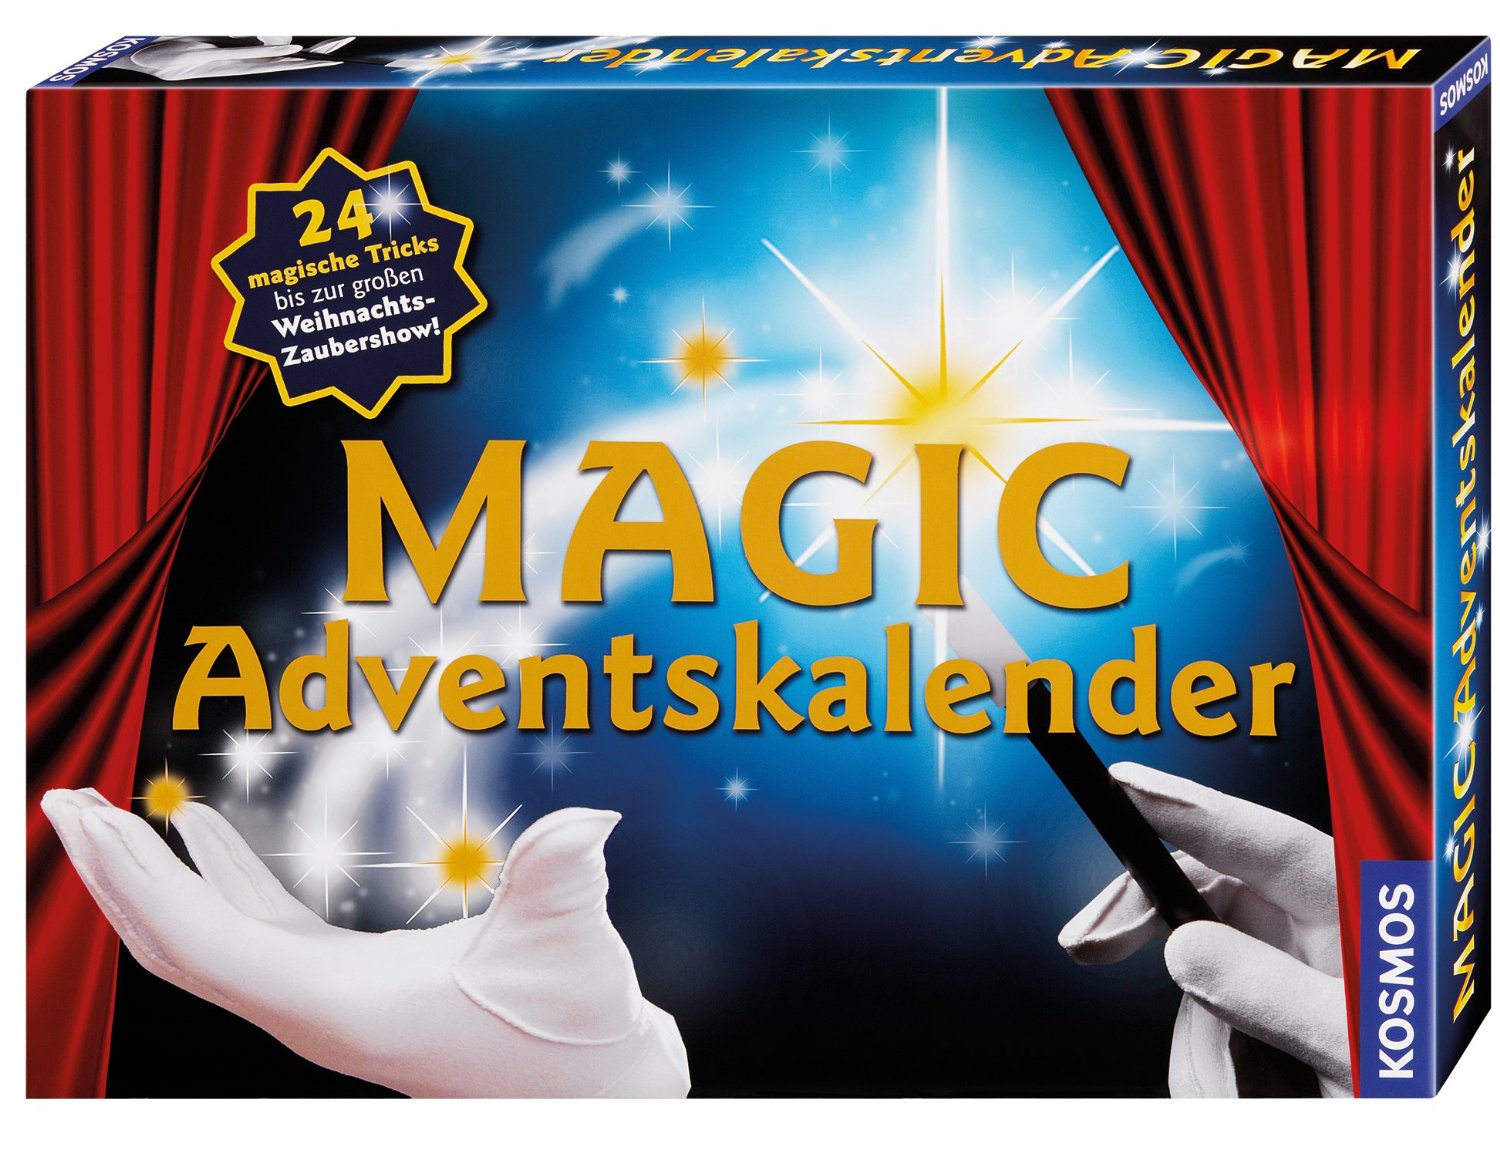 Magic Adventskalender 2015